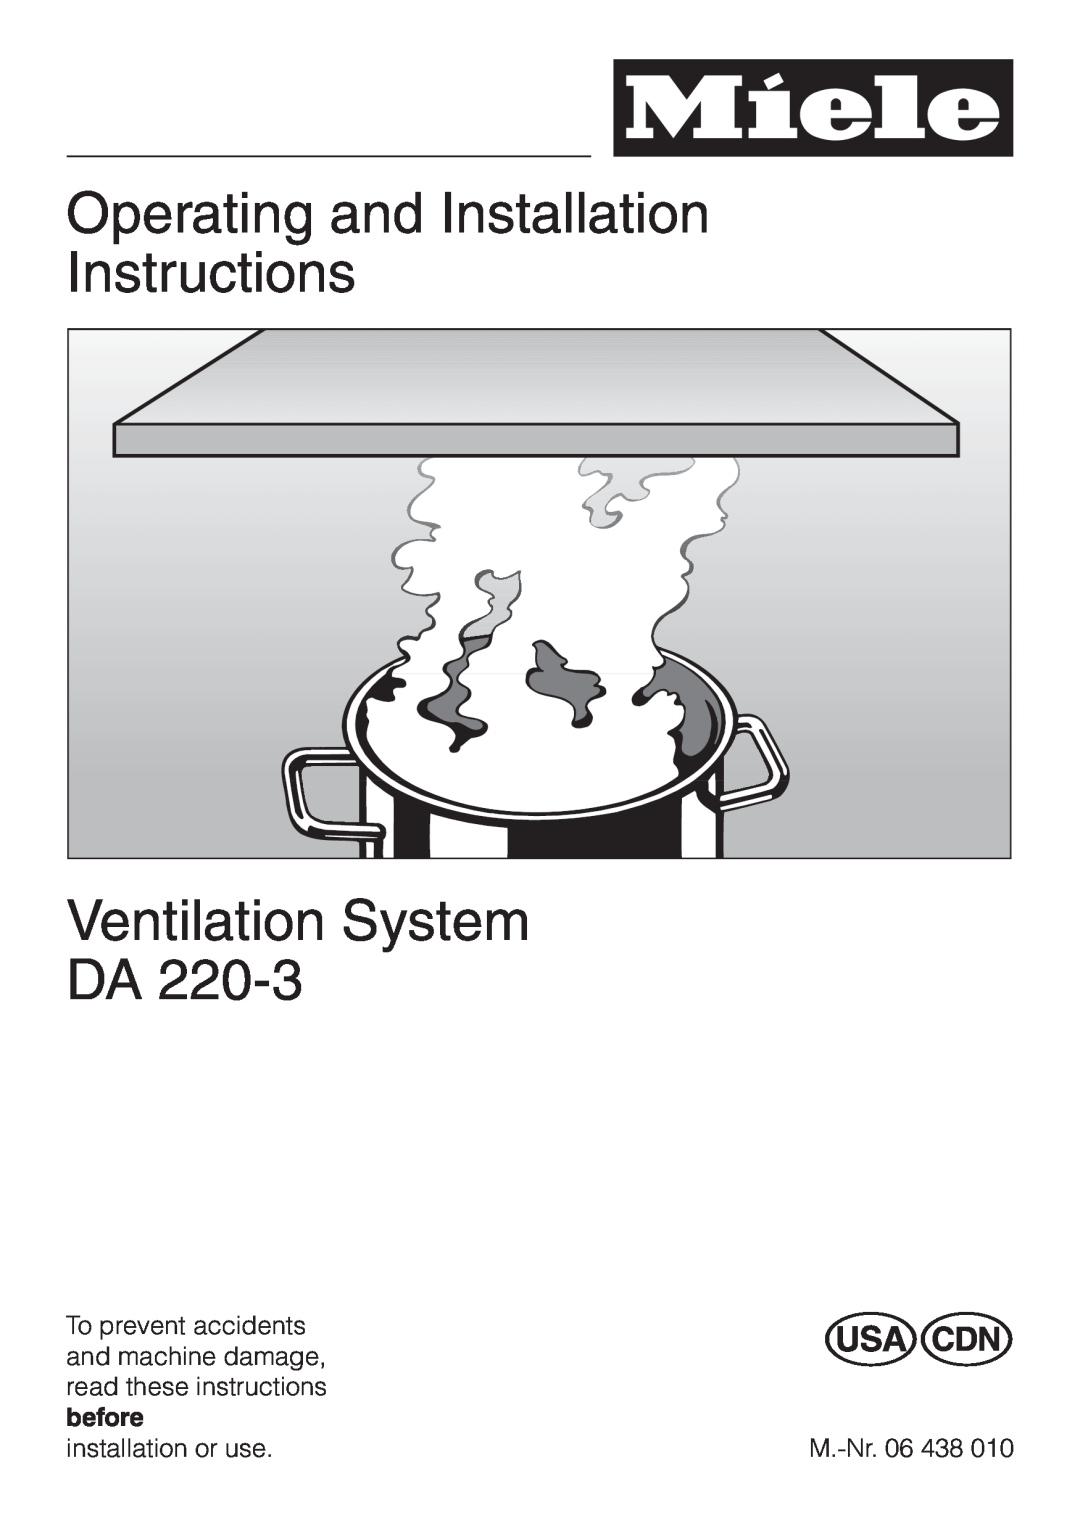 Miele DA220-3 installation instructions Operating and Installation Instructions, Ventilation System DA 